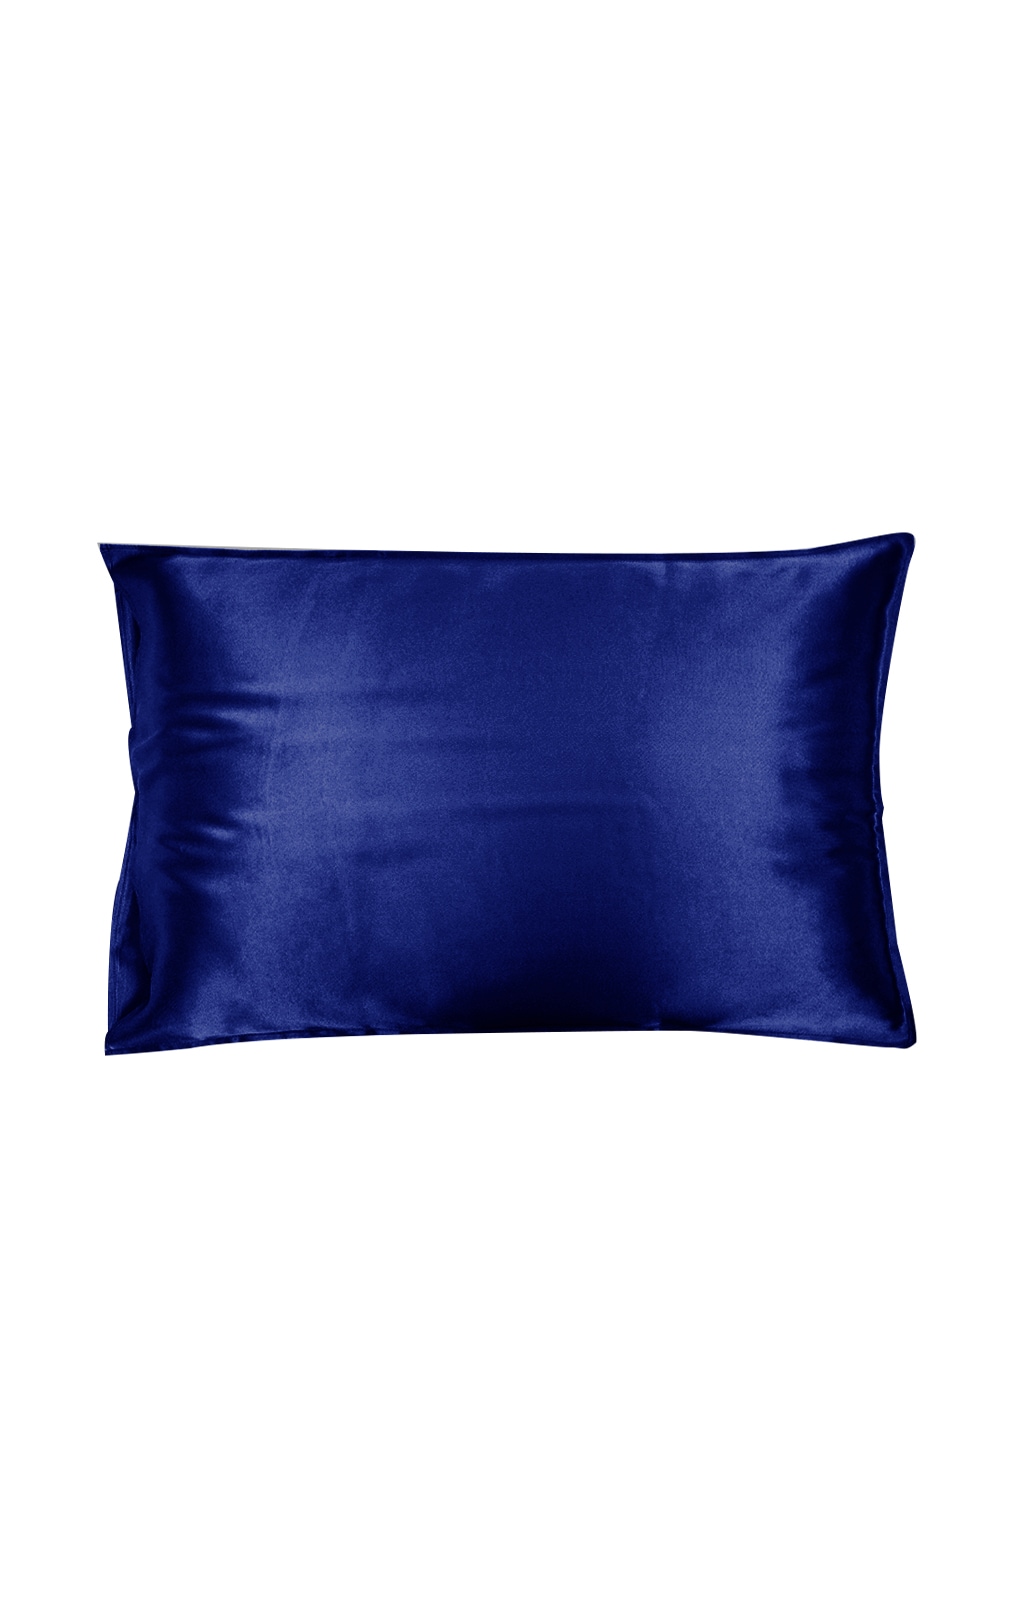 Silk pillowcase queen size navy blue